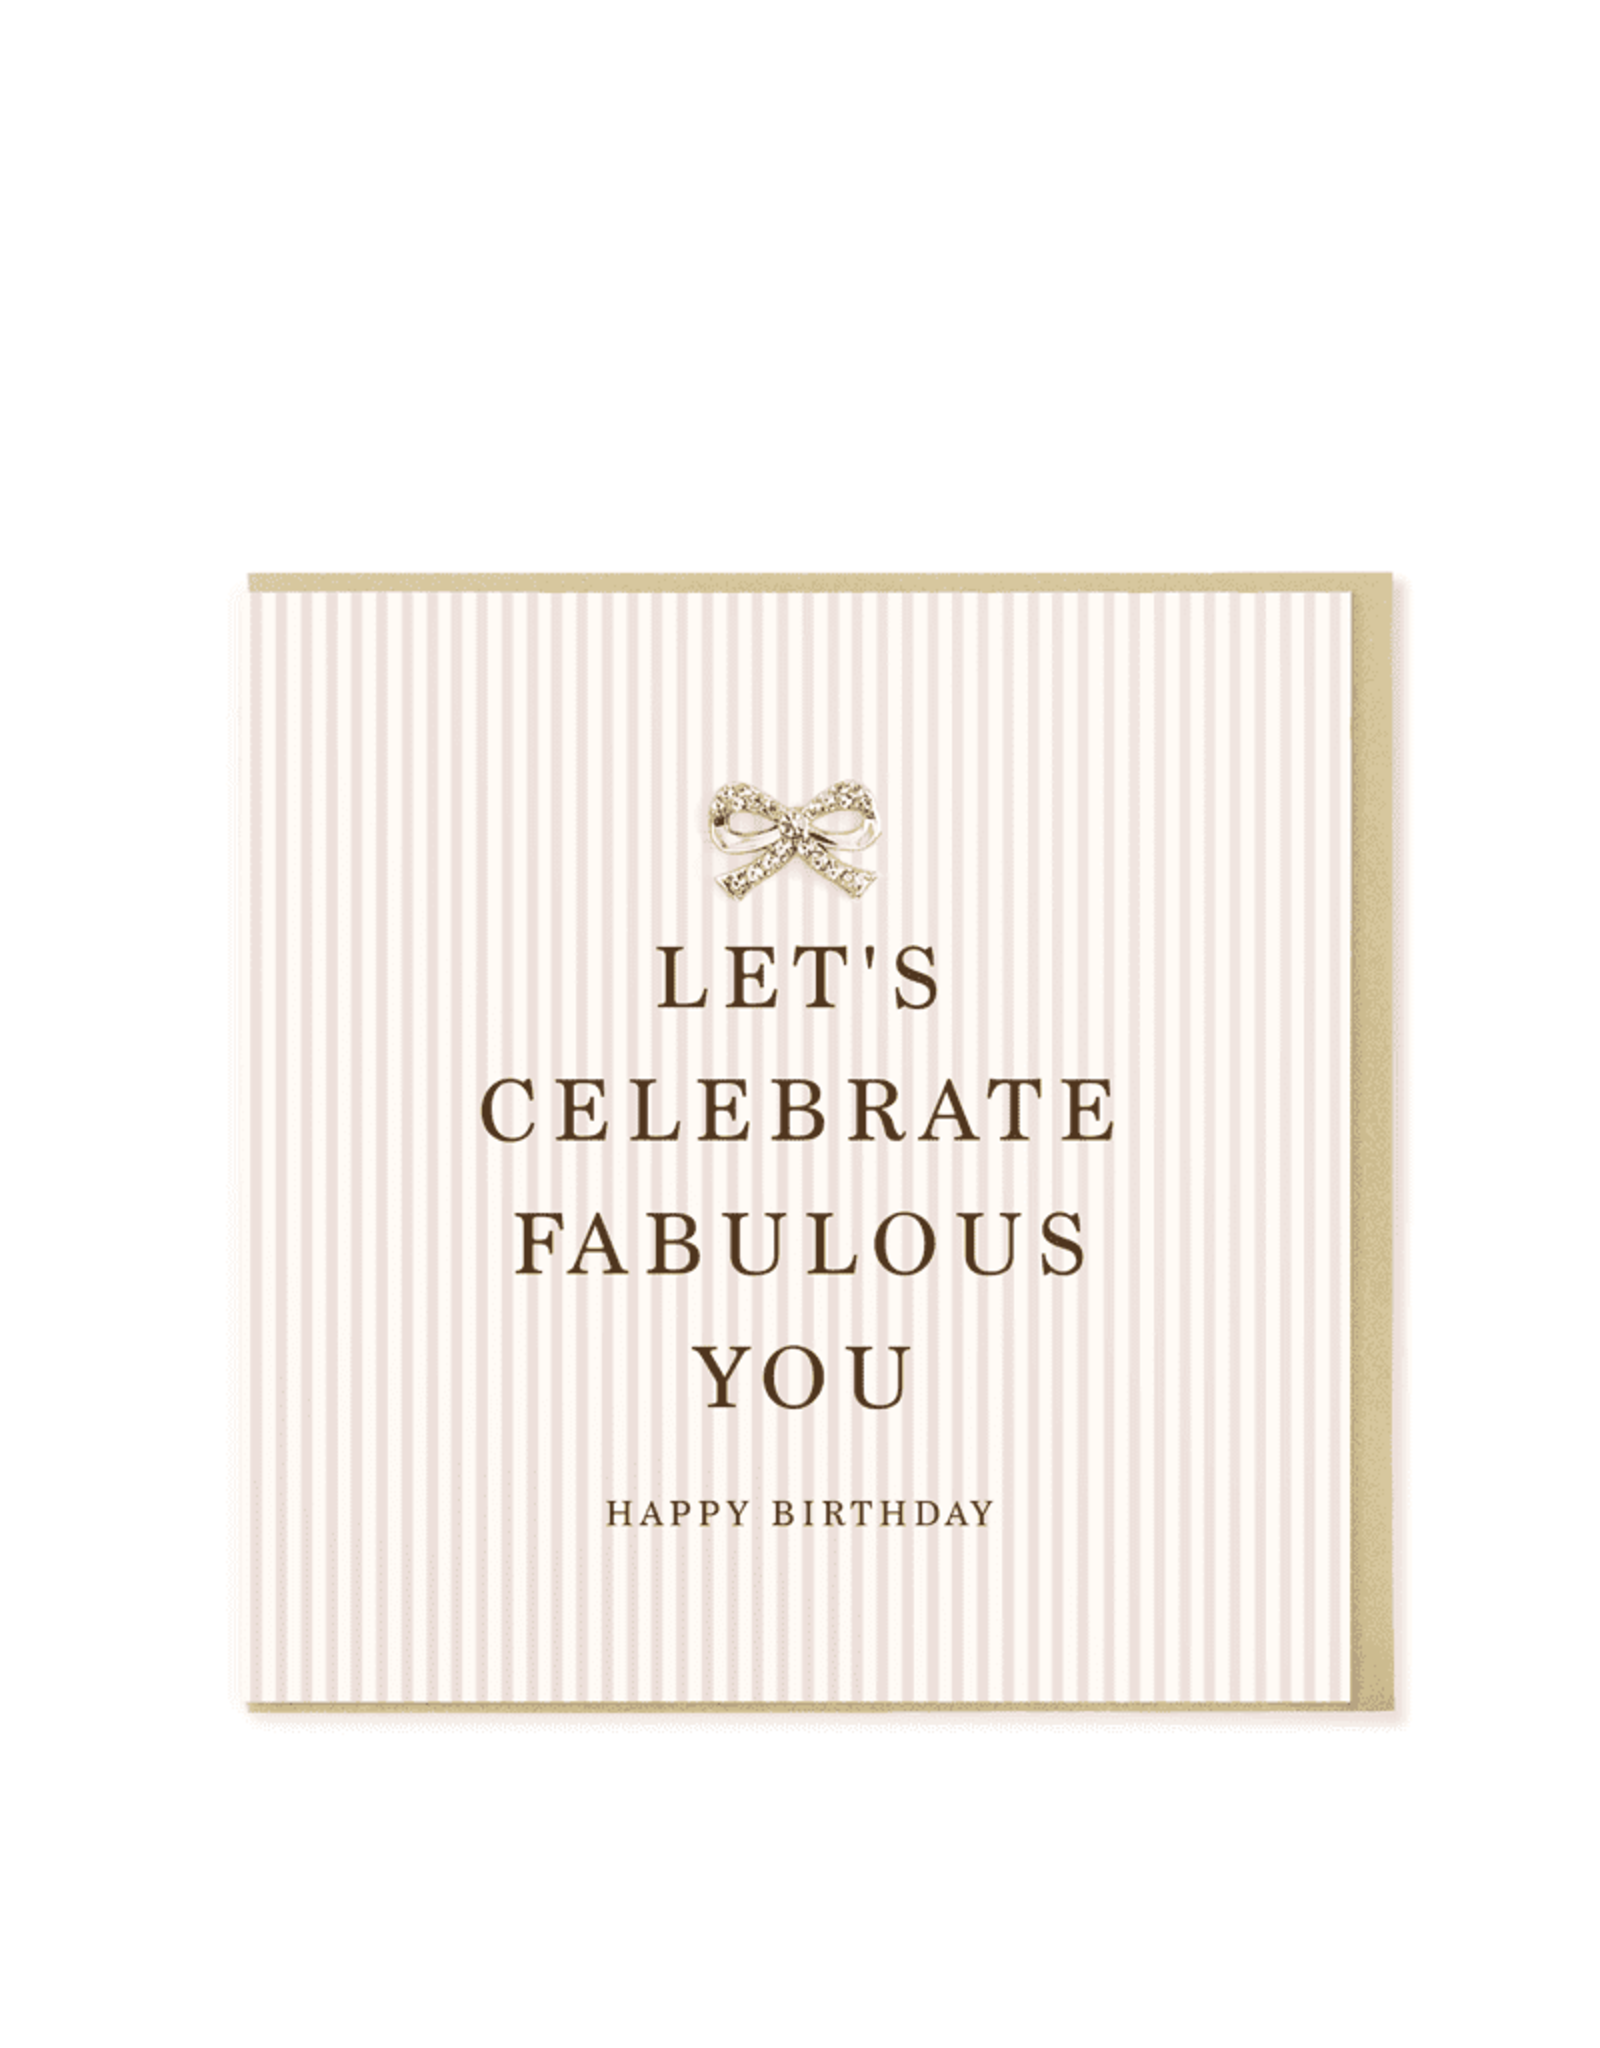 Hearts Design Wenskaart - Let's Celebrate Fabulous You